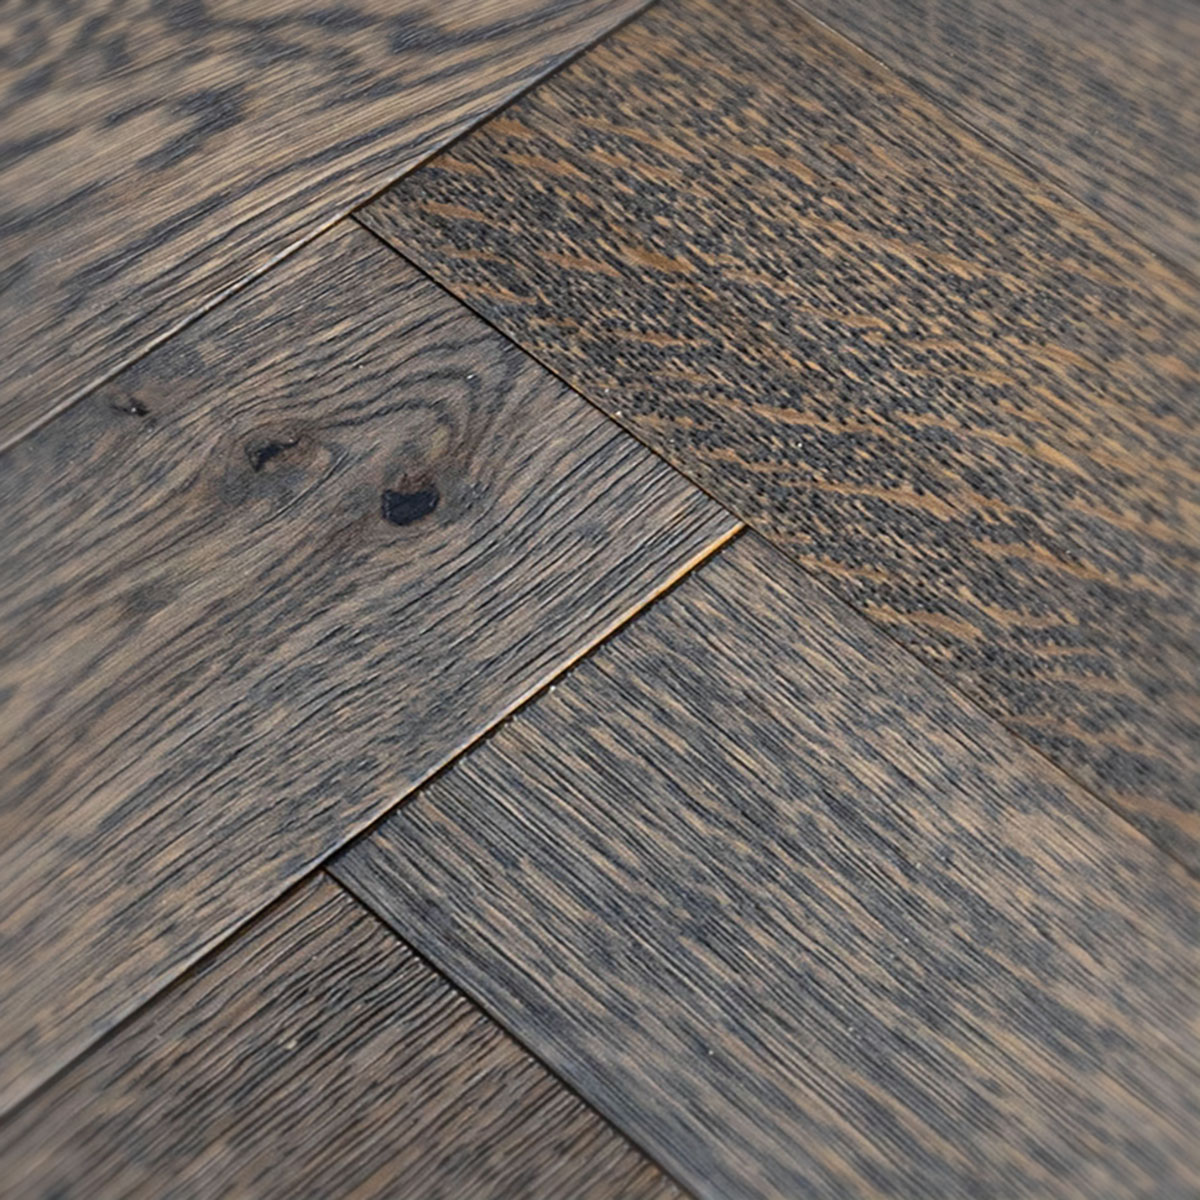 Bartons Bank - Rustic Grade Herringbone European Oak Floor